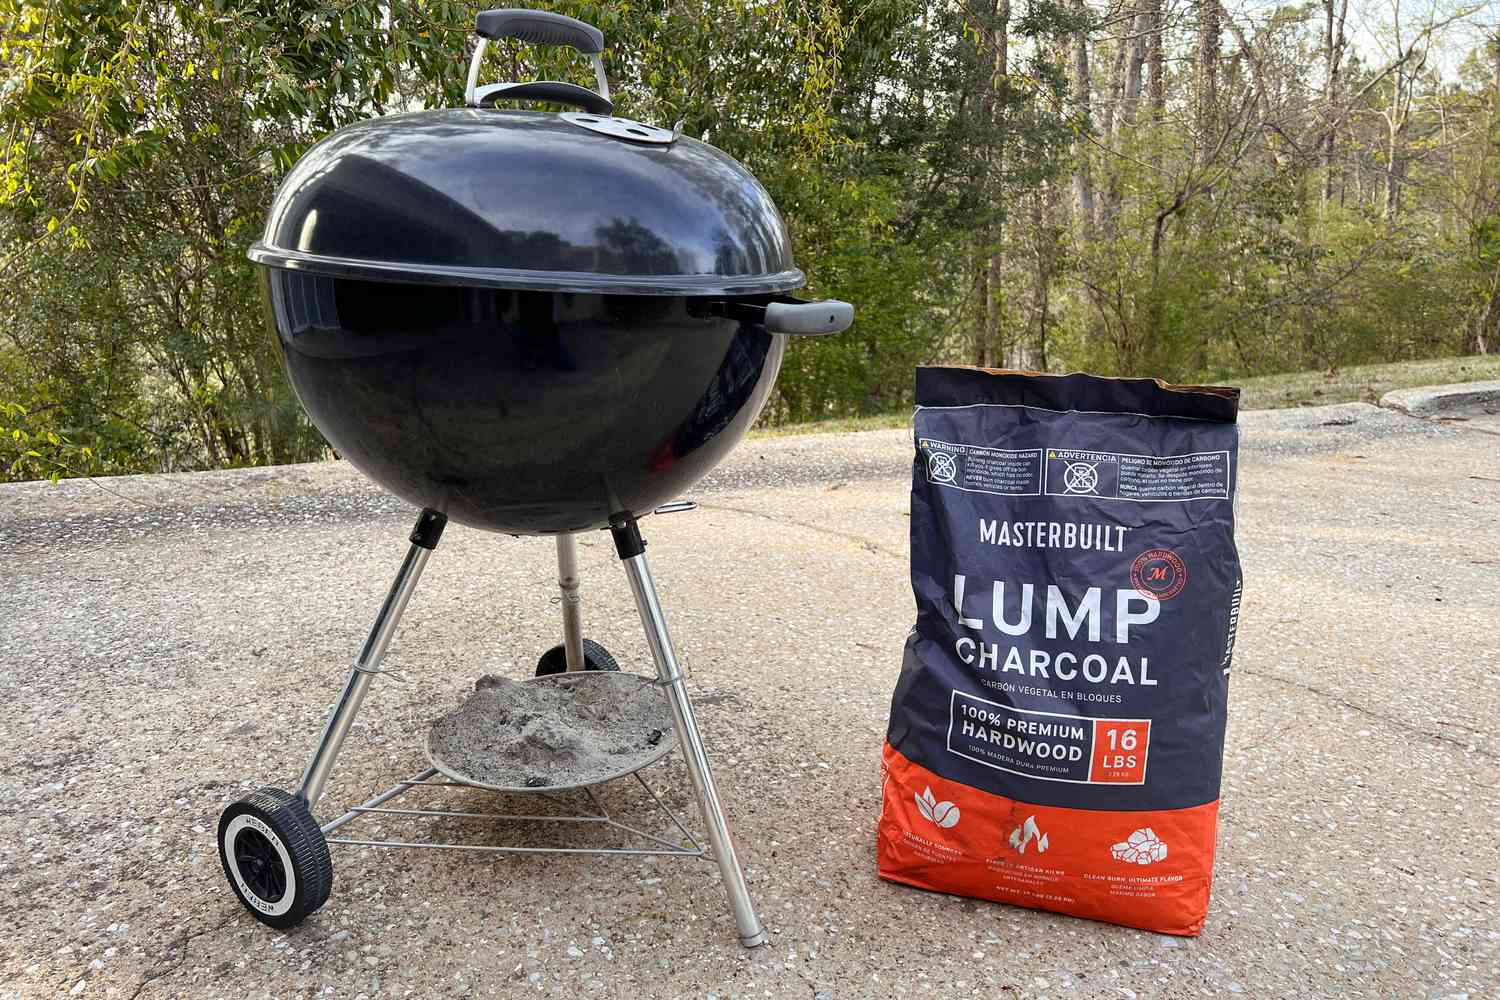 Masterbuilt Lump Charcoal bag next to a grill 